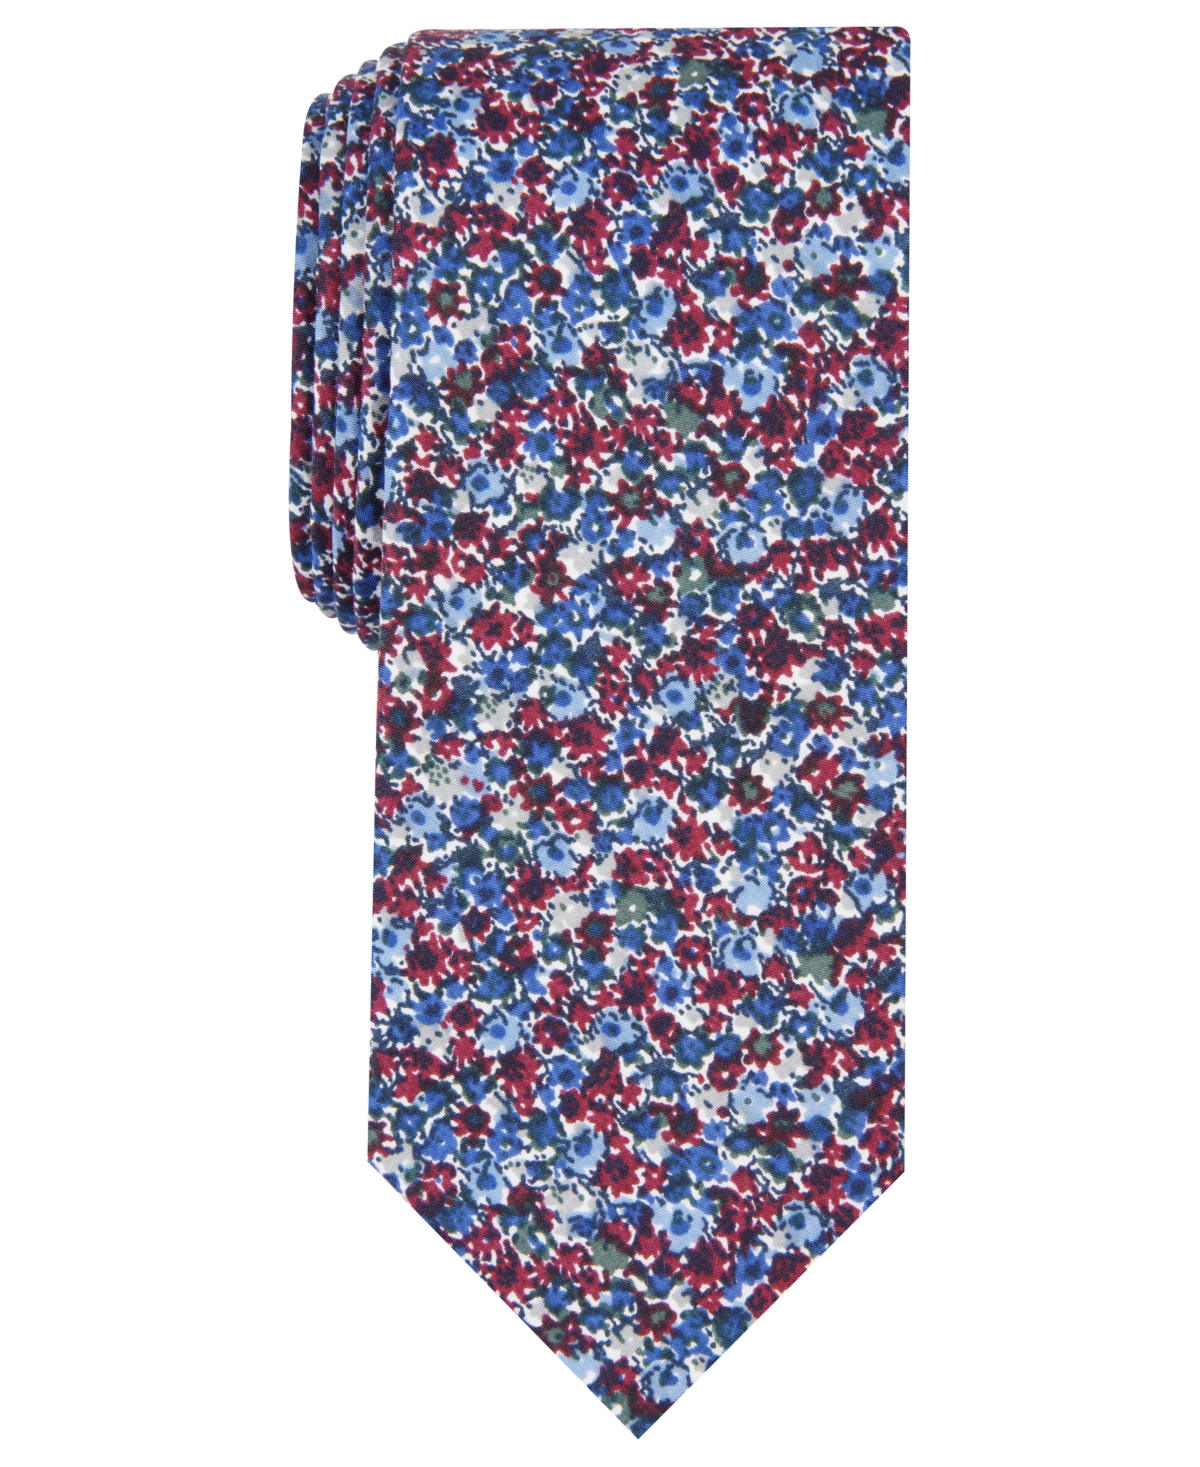 Men's Dandy Skinny Floral Tie, Created for Macy's - Burgundy